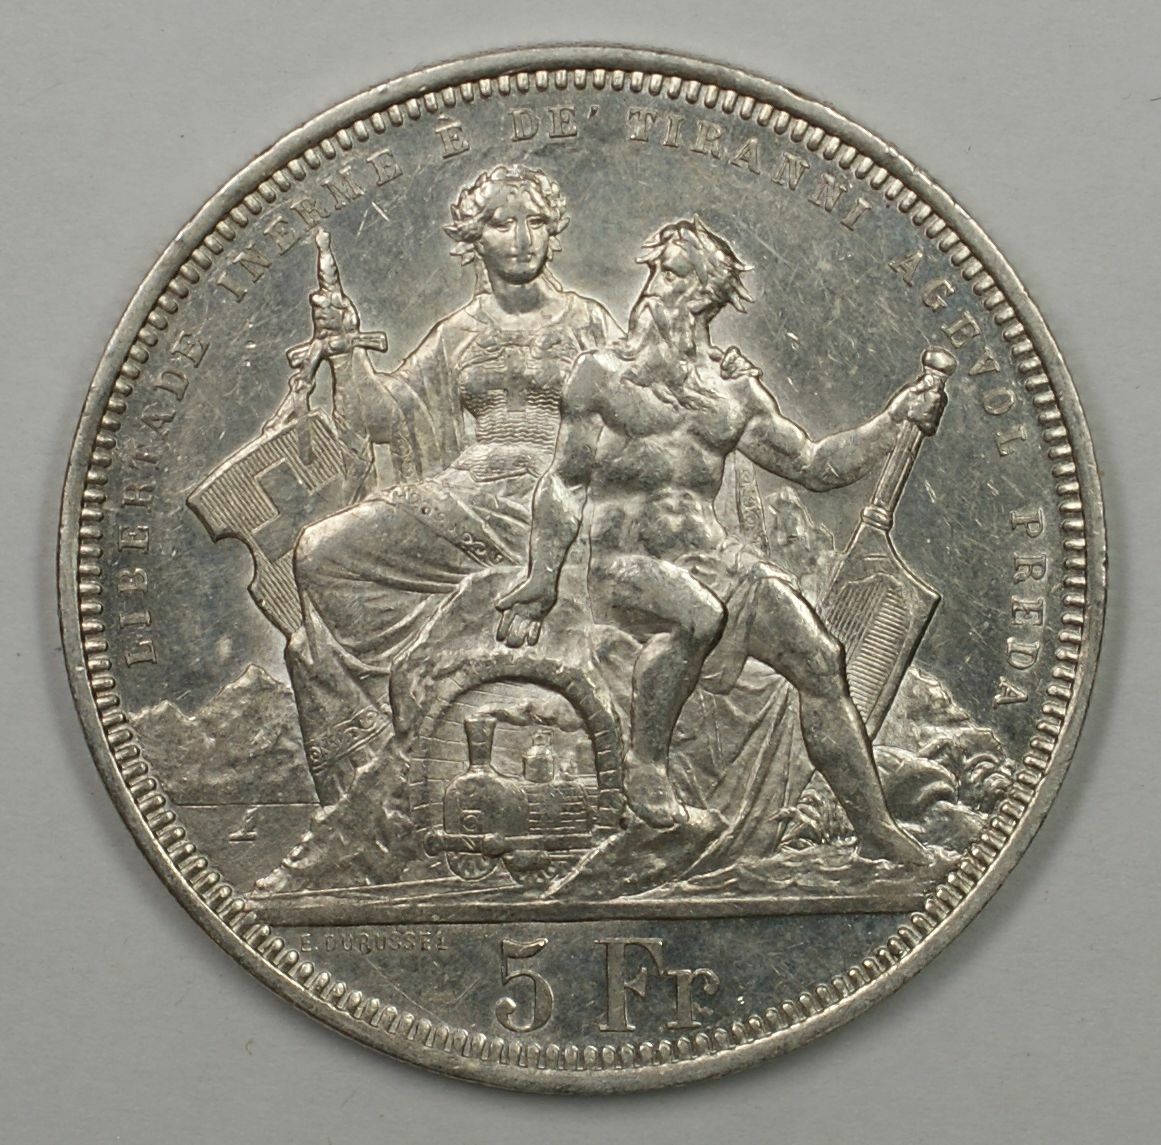 1883 Switzerland Lugano Shooting Festival 5 Francs Silver Coin (ja)